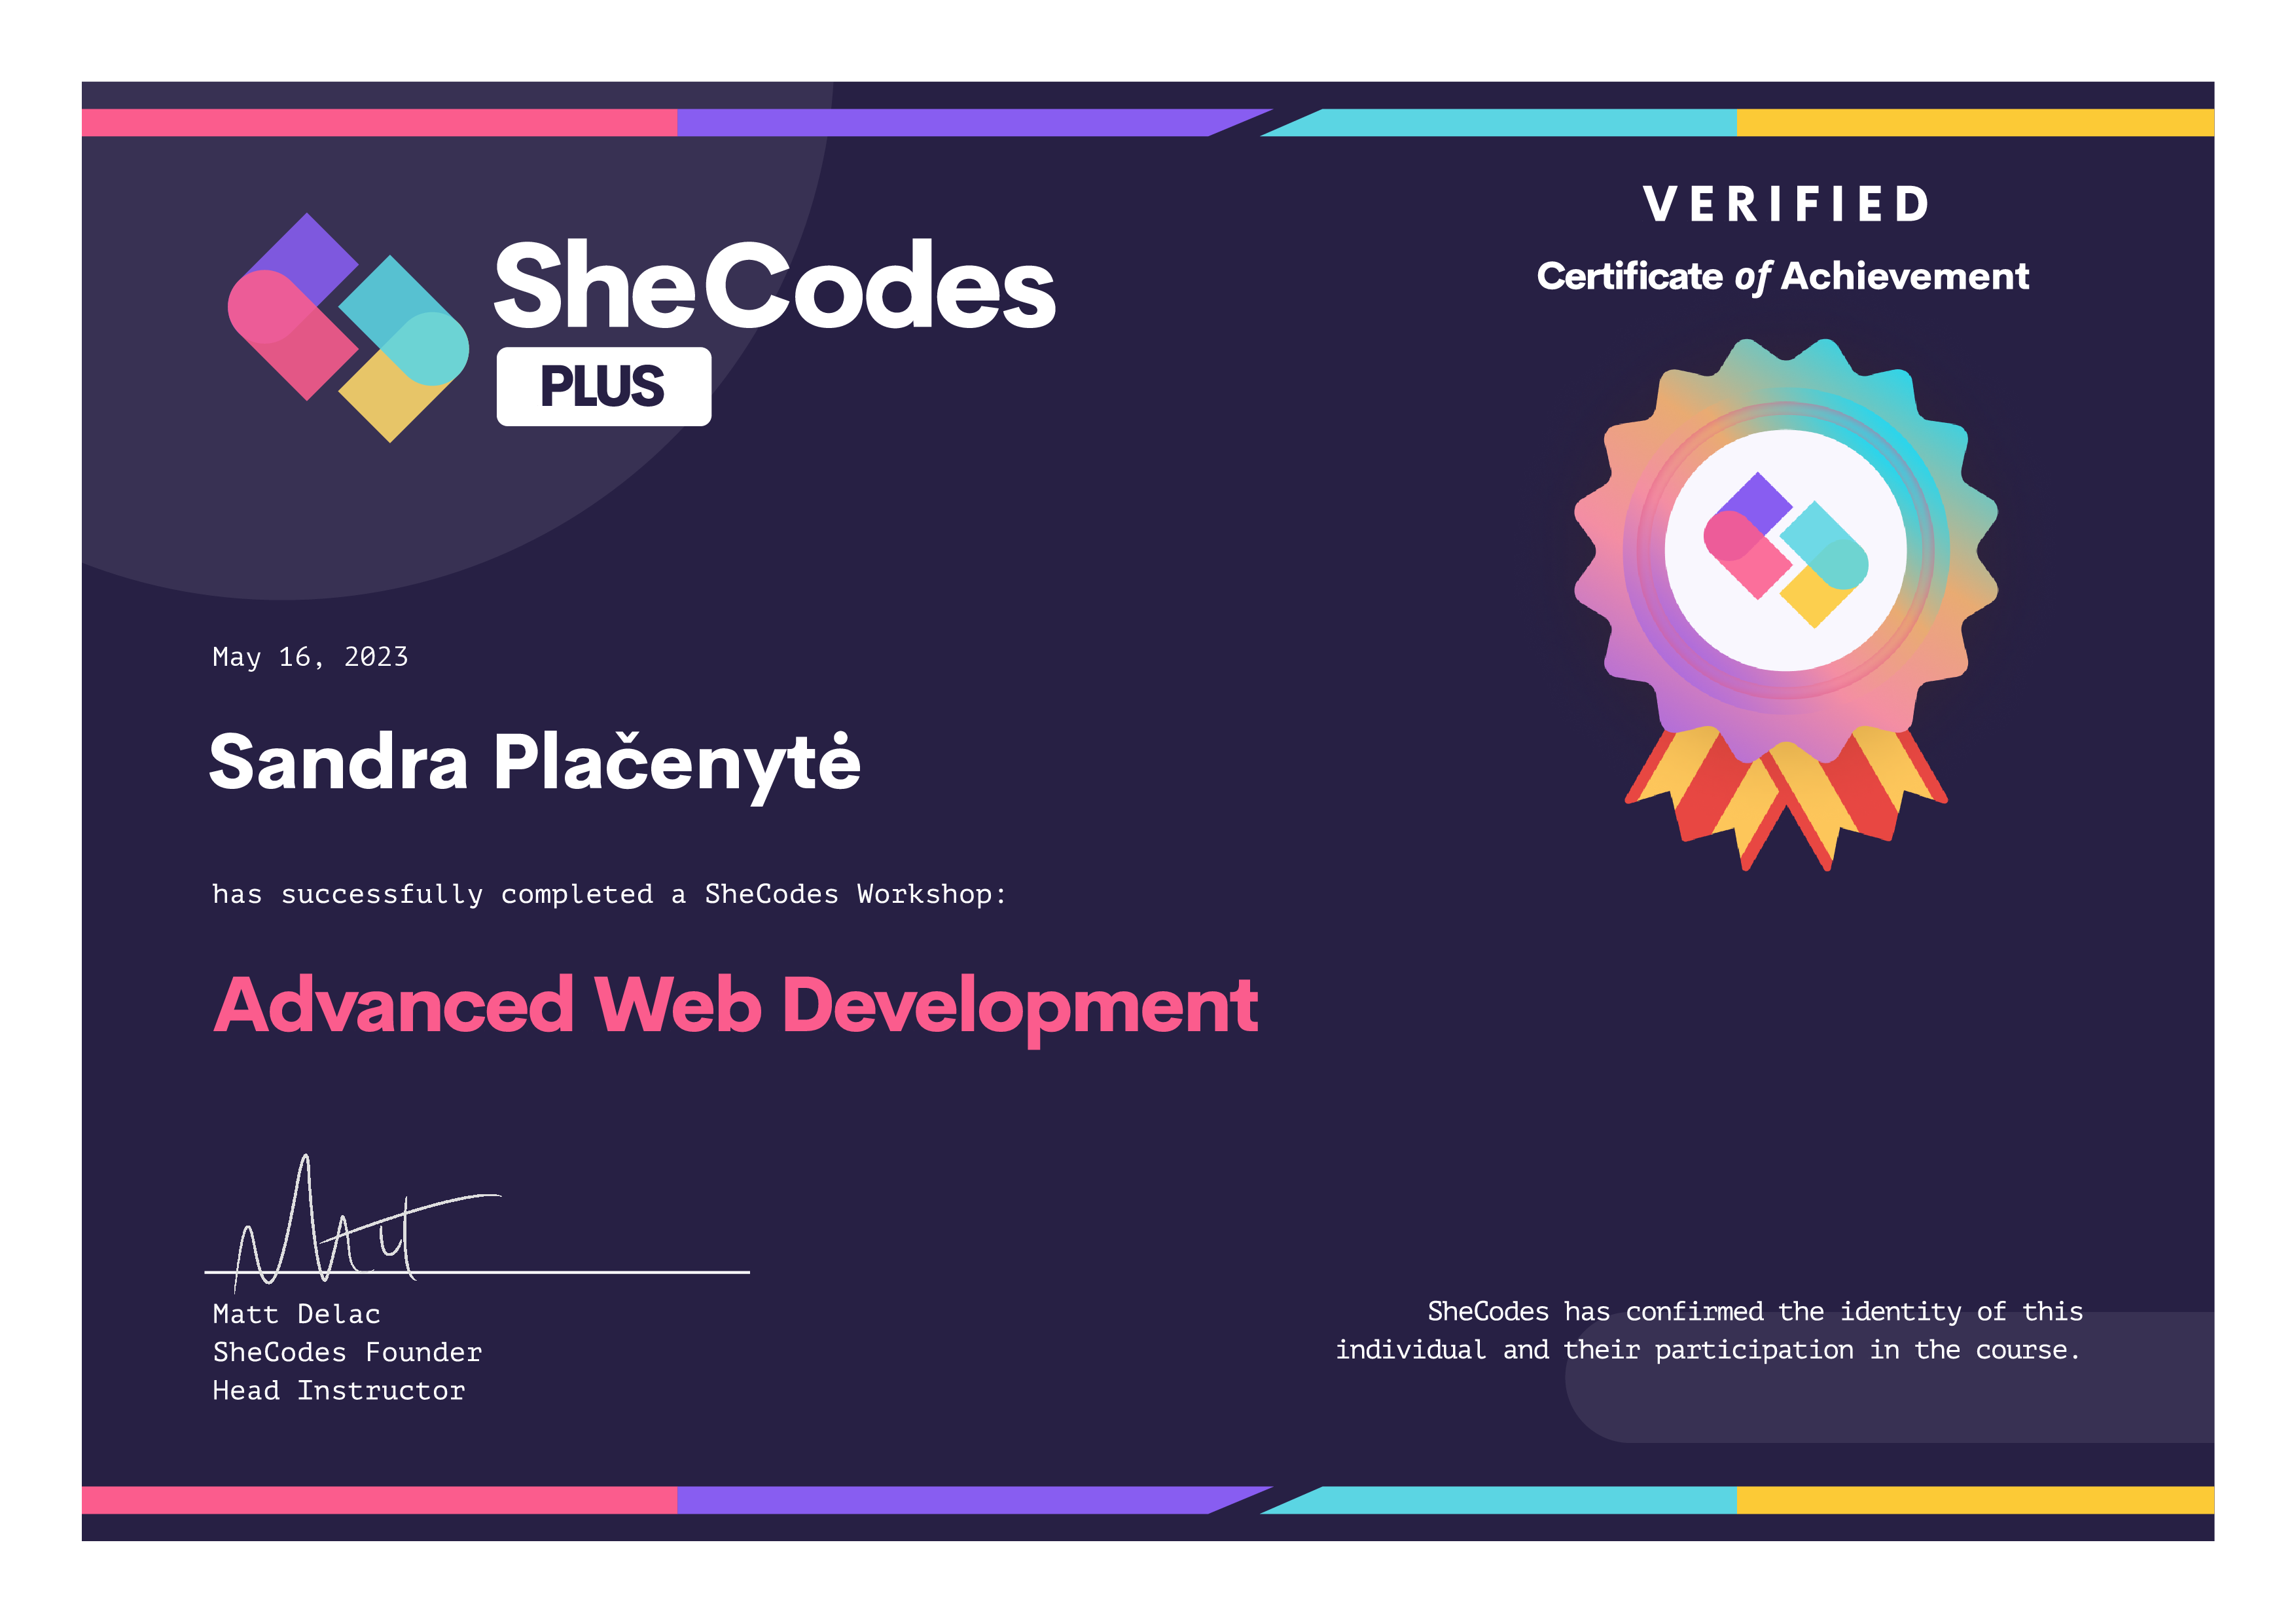 Sandra's certification to advanced web development